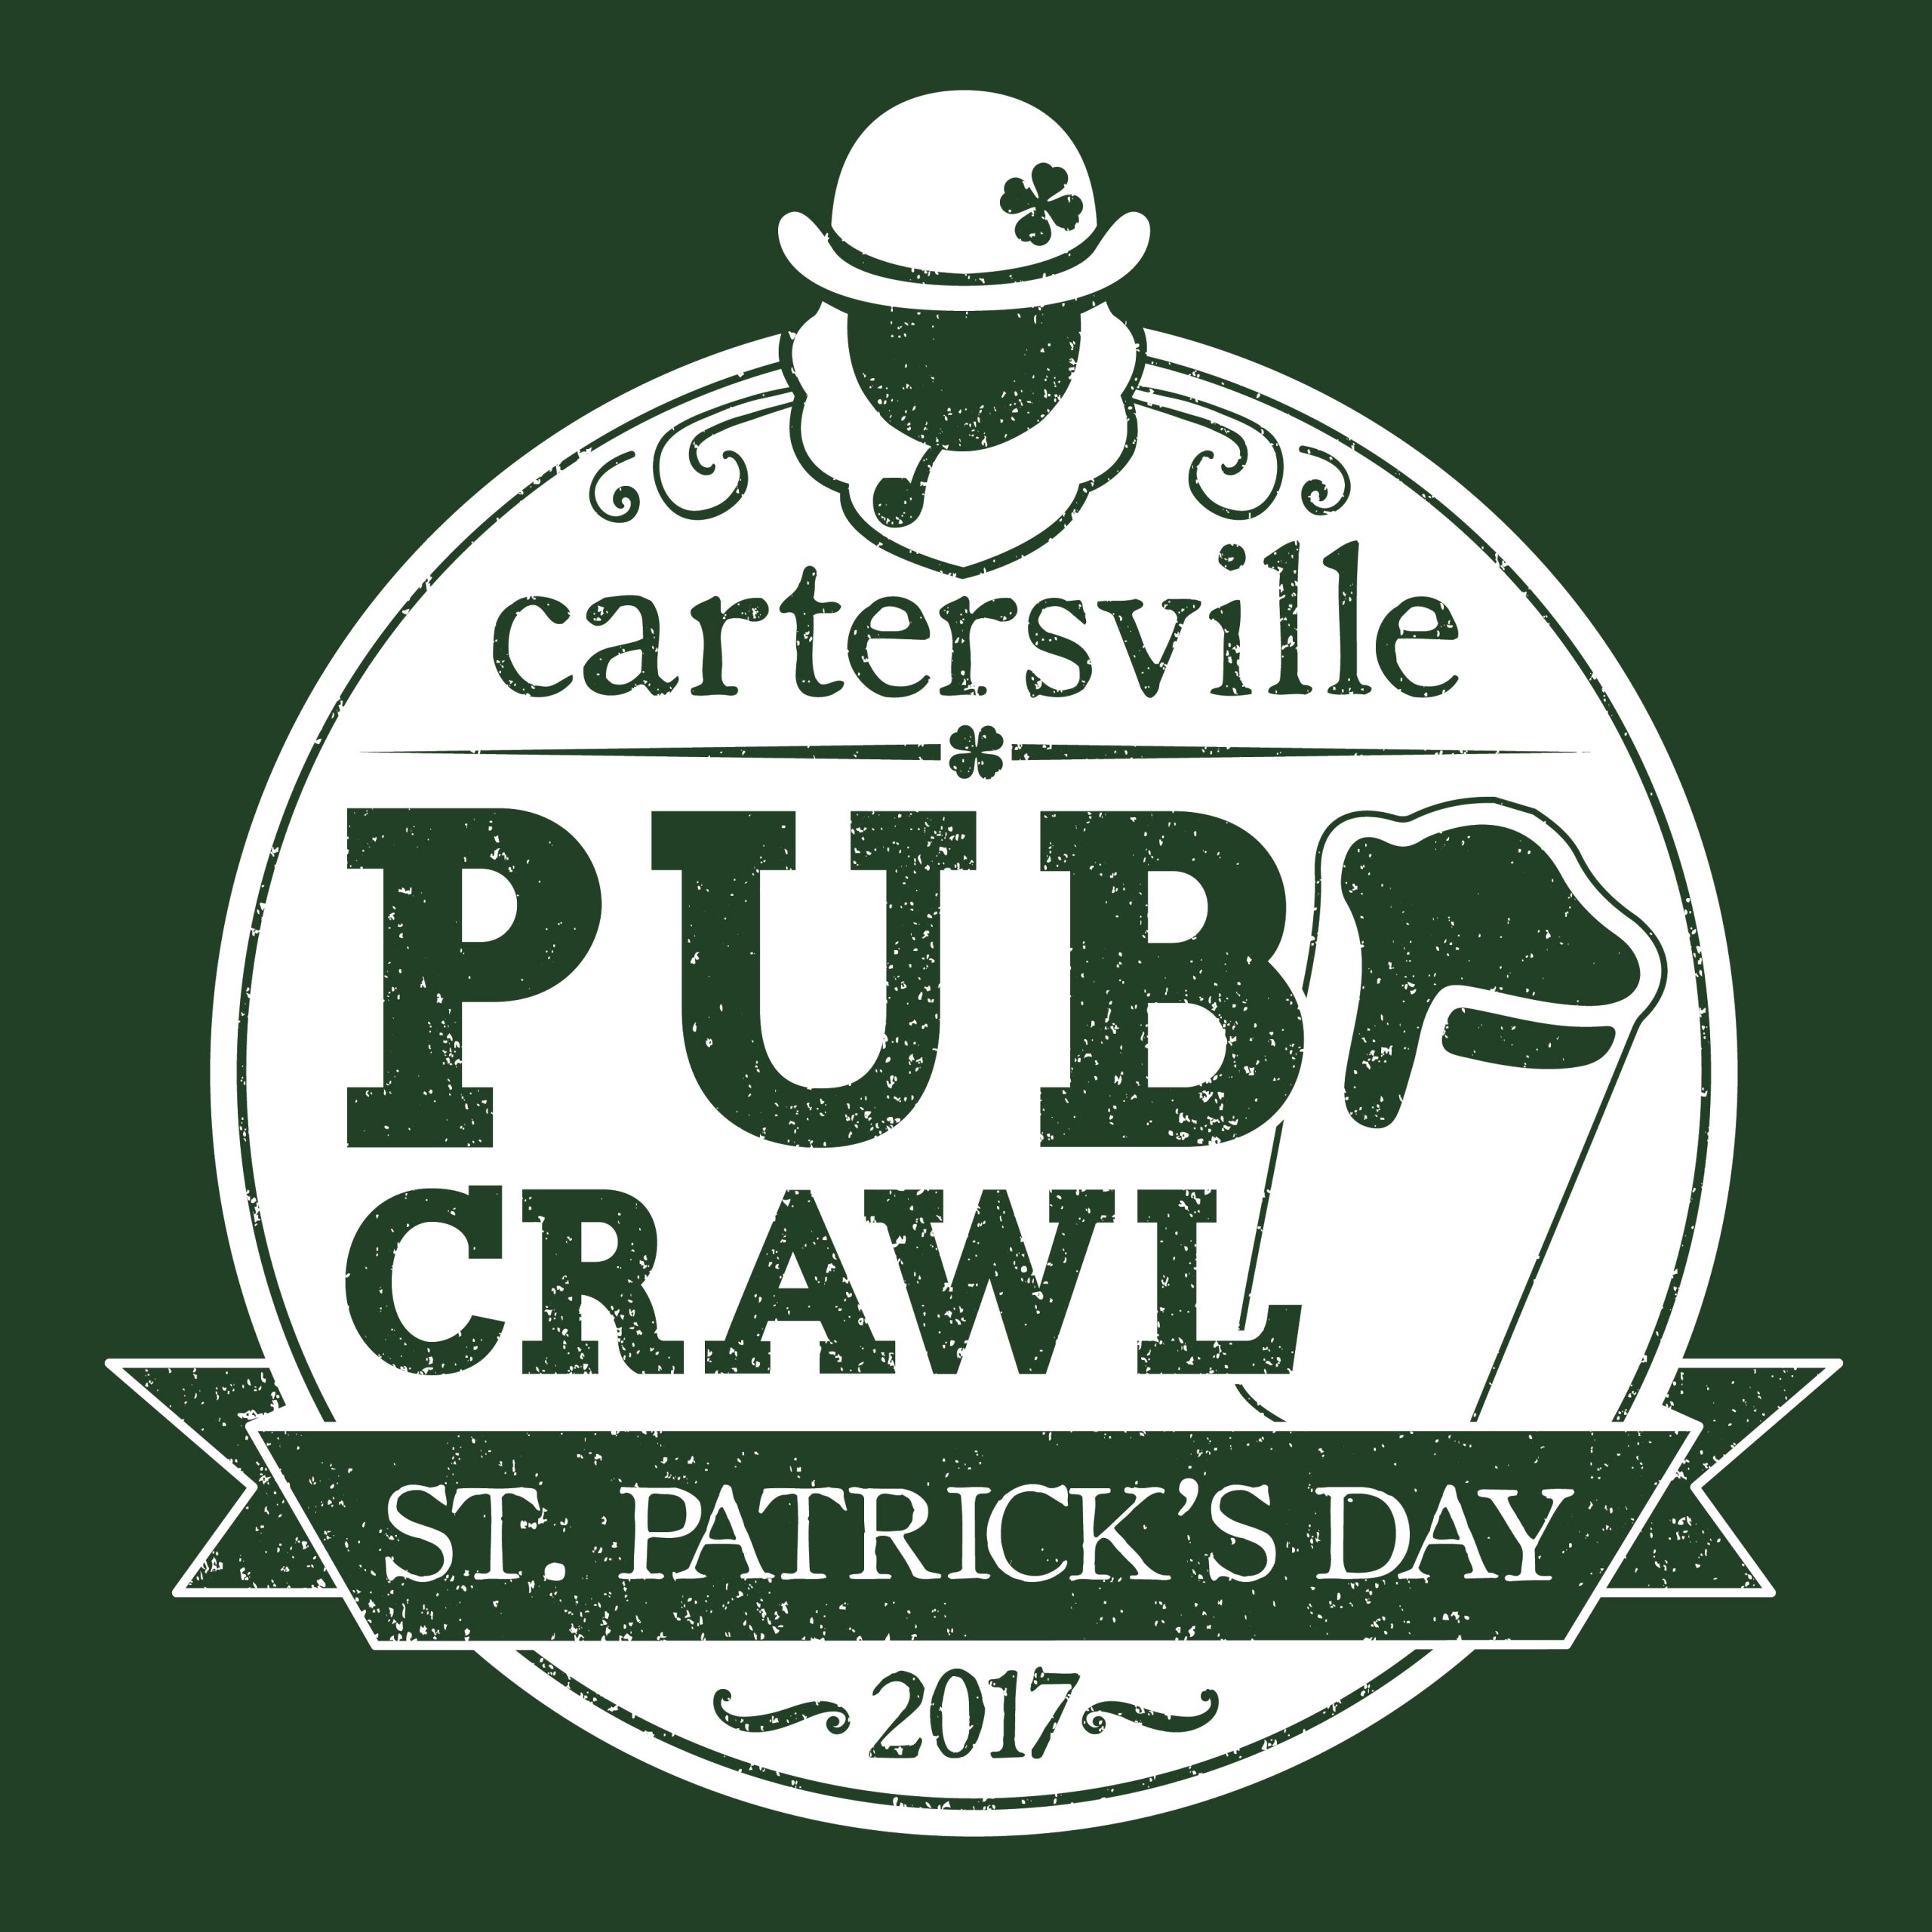 Cartersville Pub Crawl St. Patrick's Day 2017 Logo Design